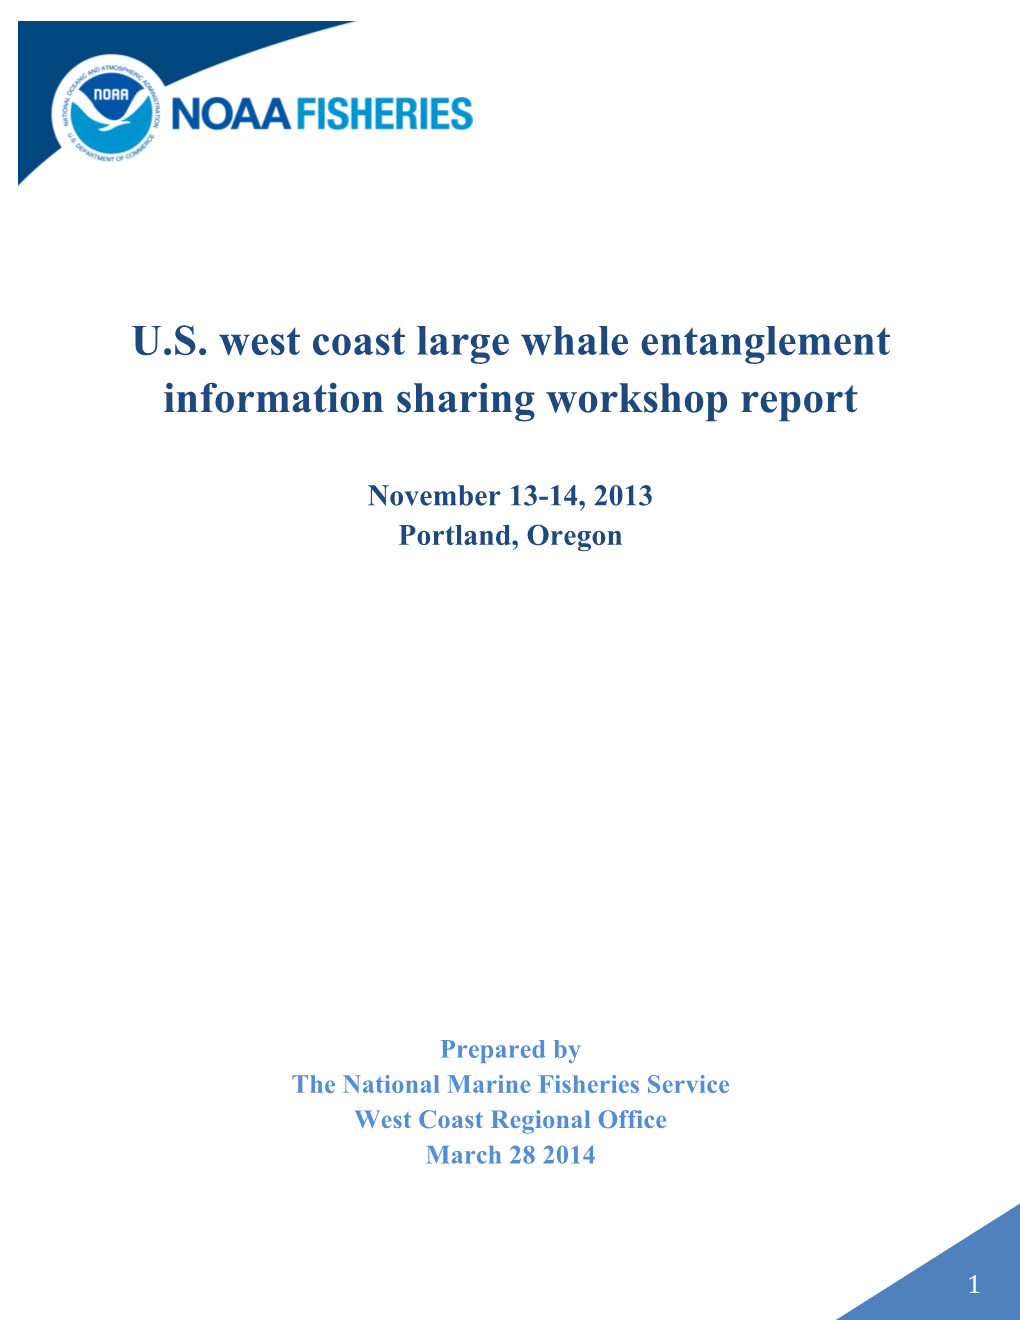 U.S. West Coast Large Whale Entanglement Information Sharing Workshop Report